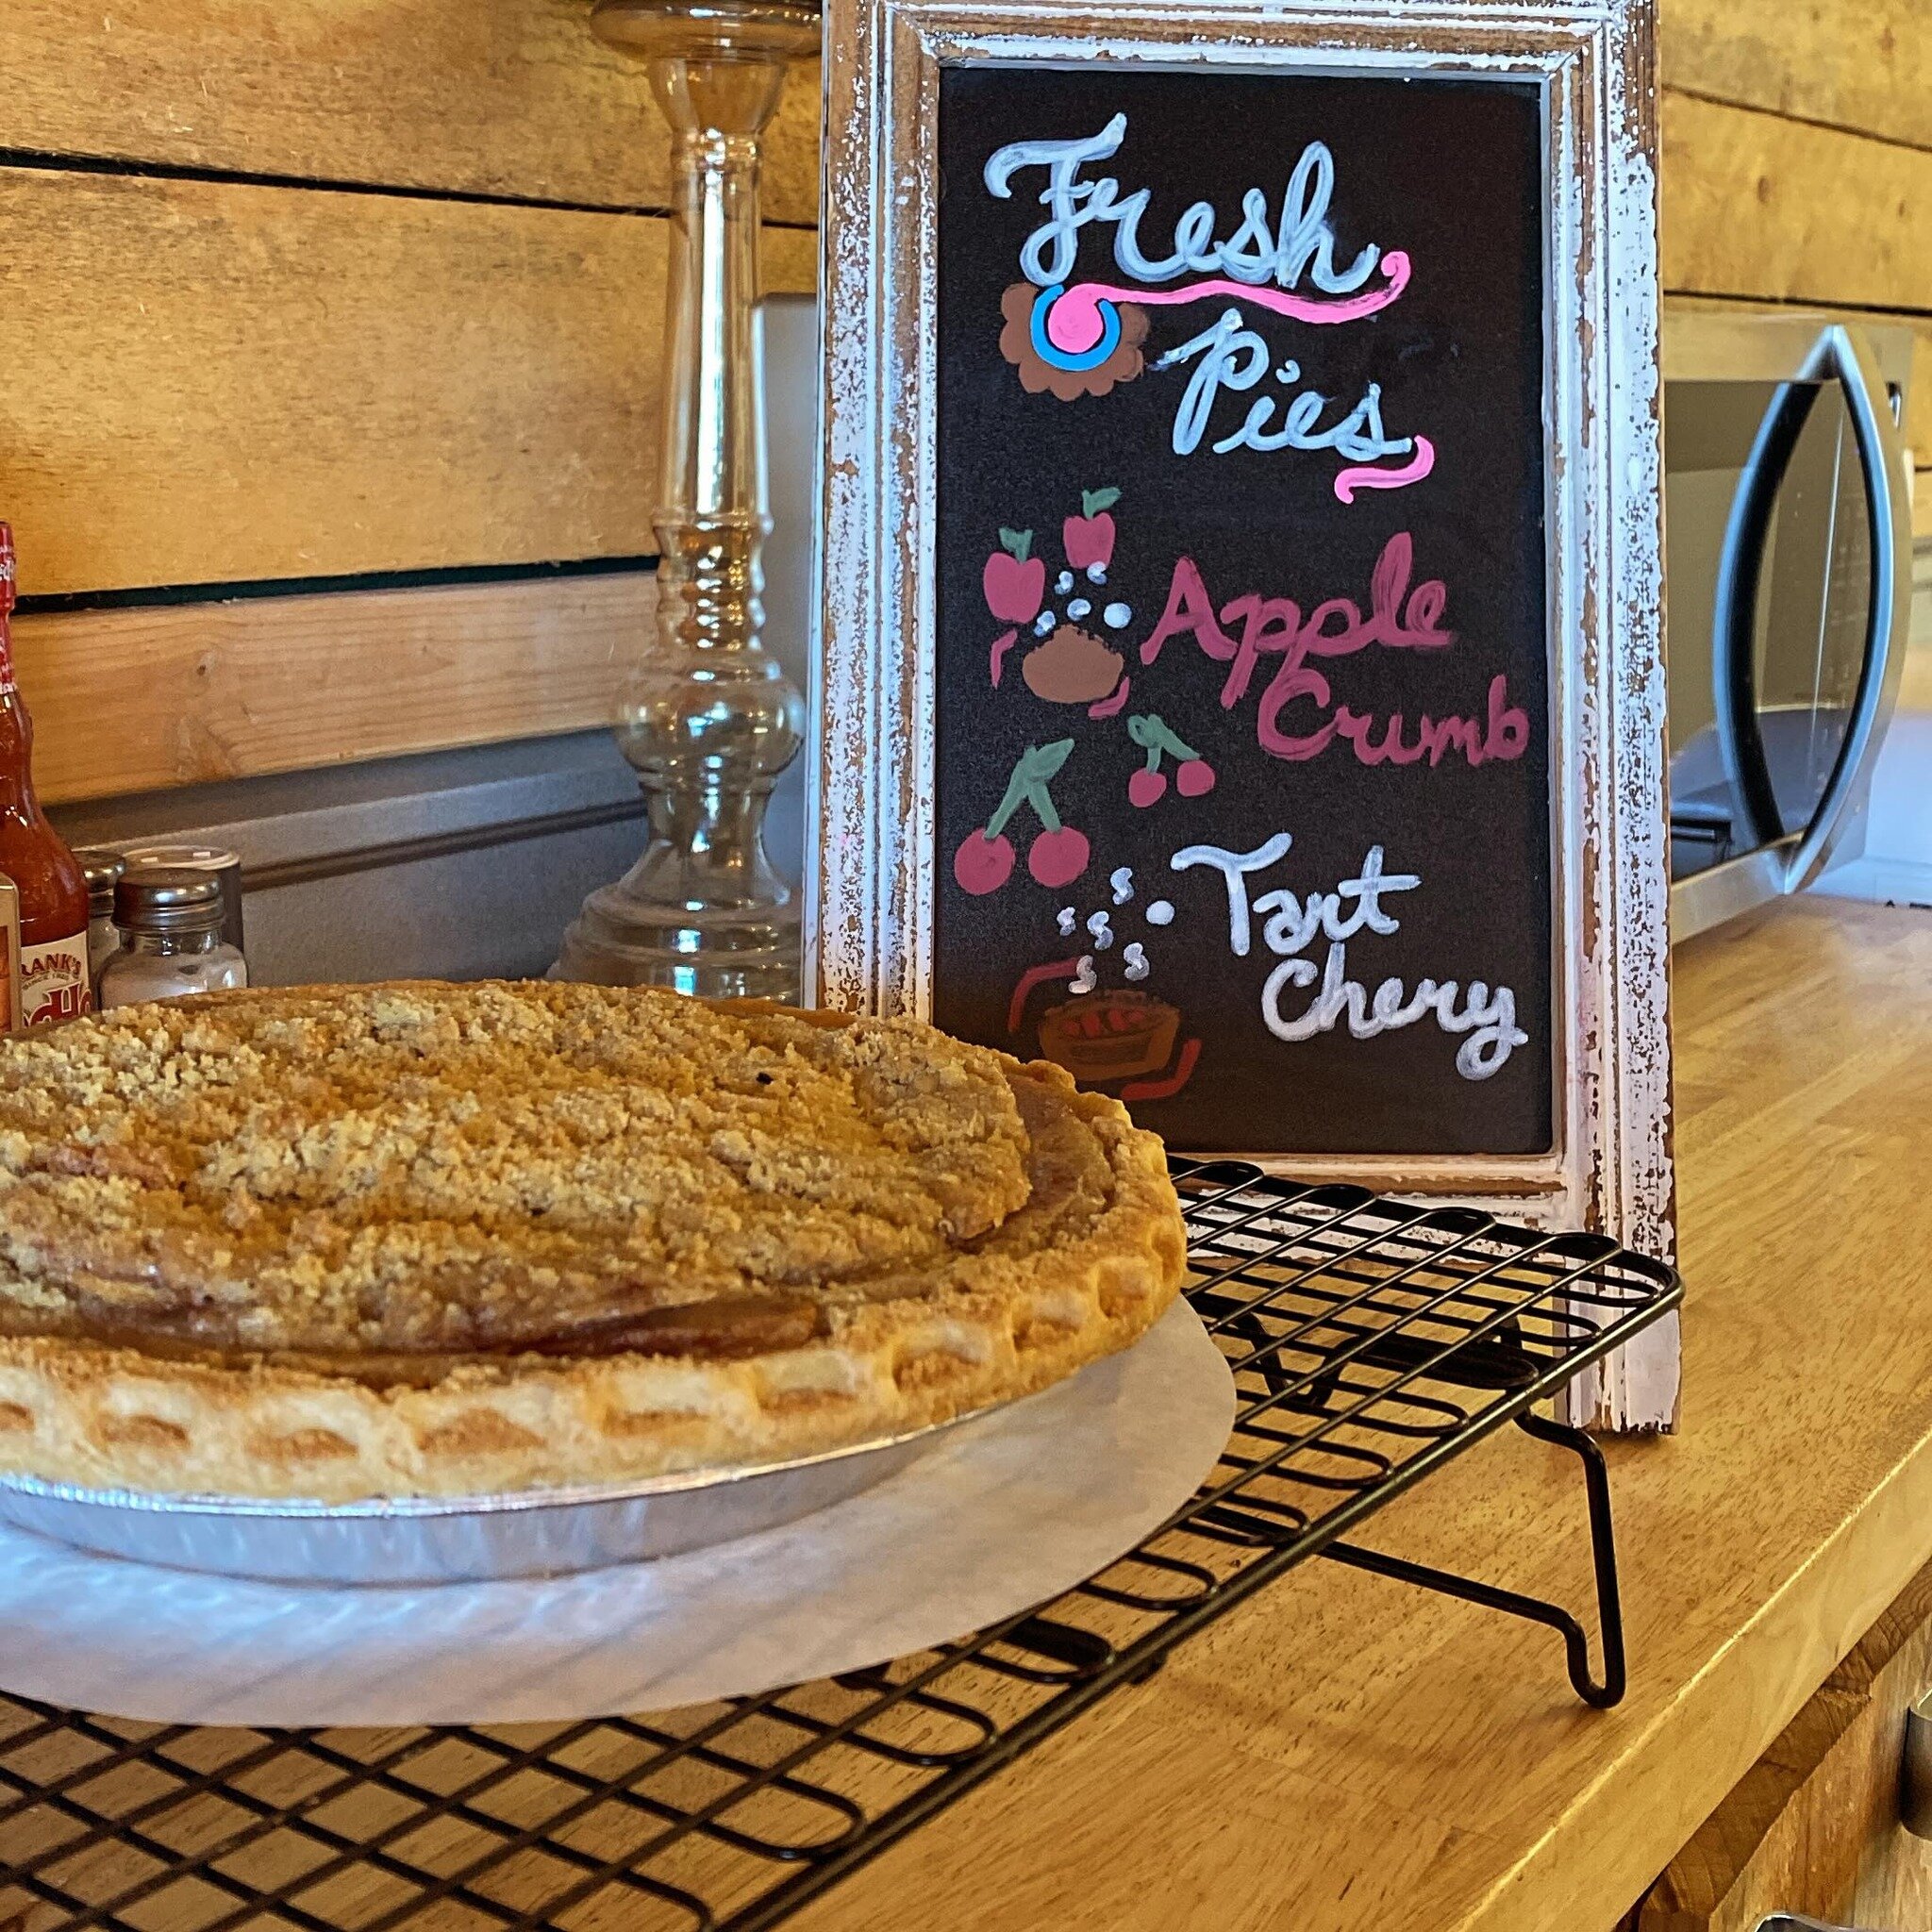 Apple Crumb Pie available!
also for sale:
&bull;Keylime
&bull;Strawberry cream
&bull;Coconut cream
&bull;Peanut Buttler Bliss
&bull;Chocolate Caramel Silk

#pie #alaskabakery #alaska #localbakery #localalaska #localalaskabusiness #shoplocal